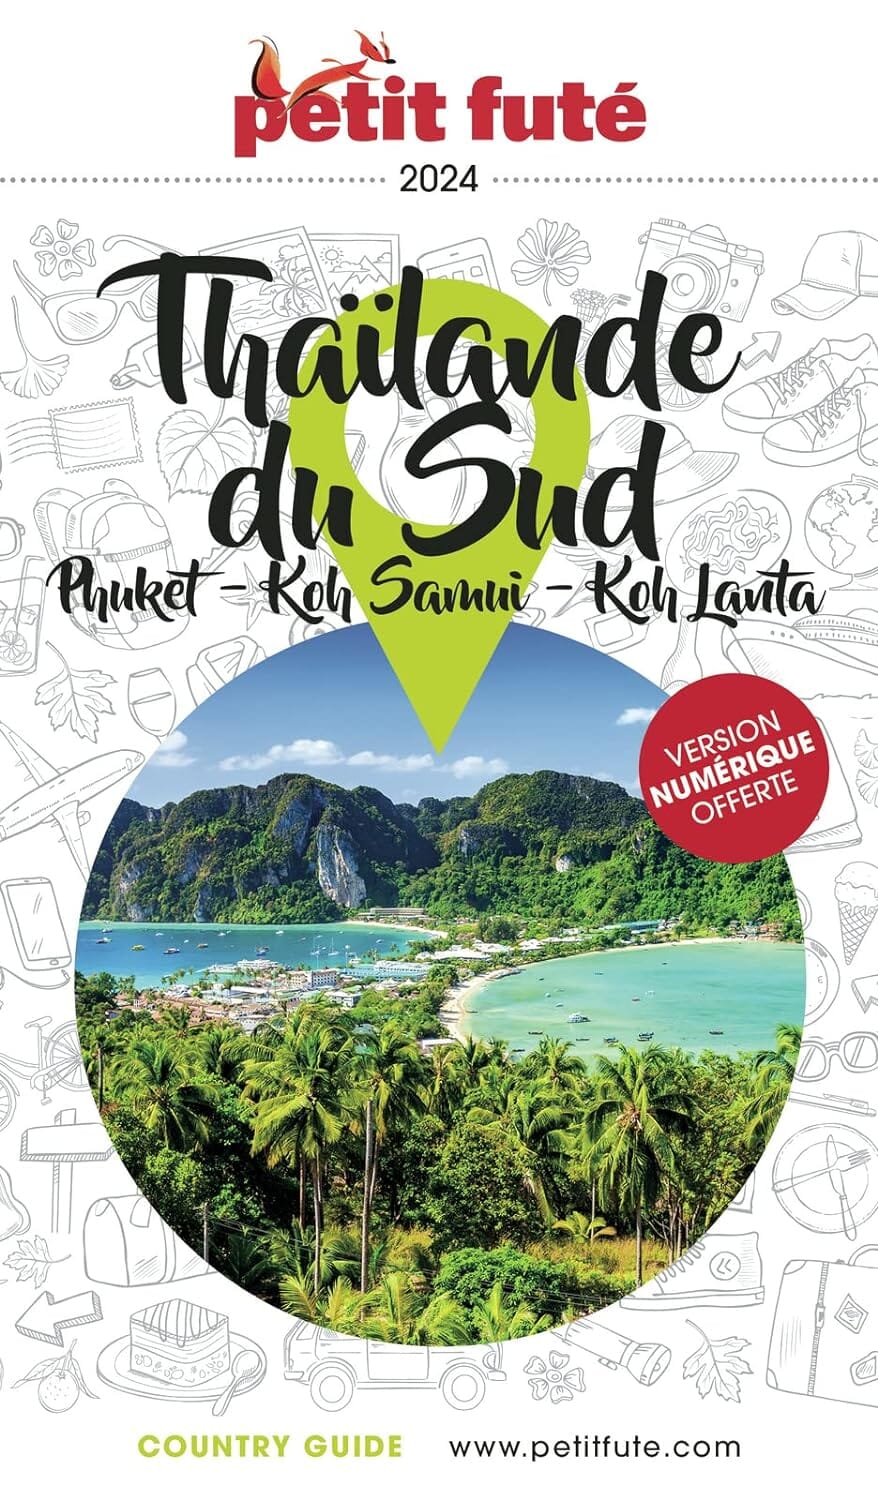 Guide de voyage - Thaïlande Sud, Phuket, Koh Samui, Koh Lanta 2024 | Petit Futé guide de voyage Petit Futé 